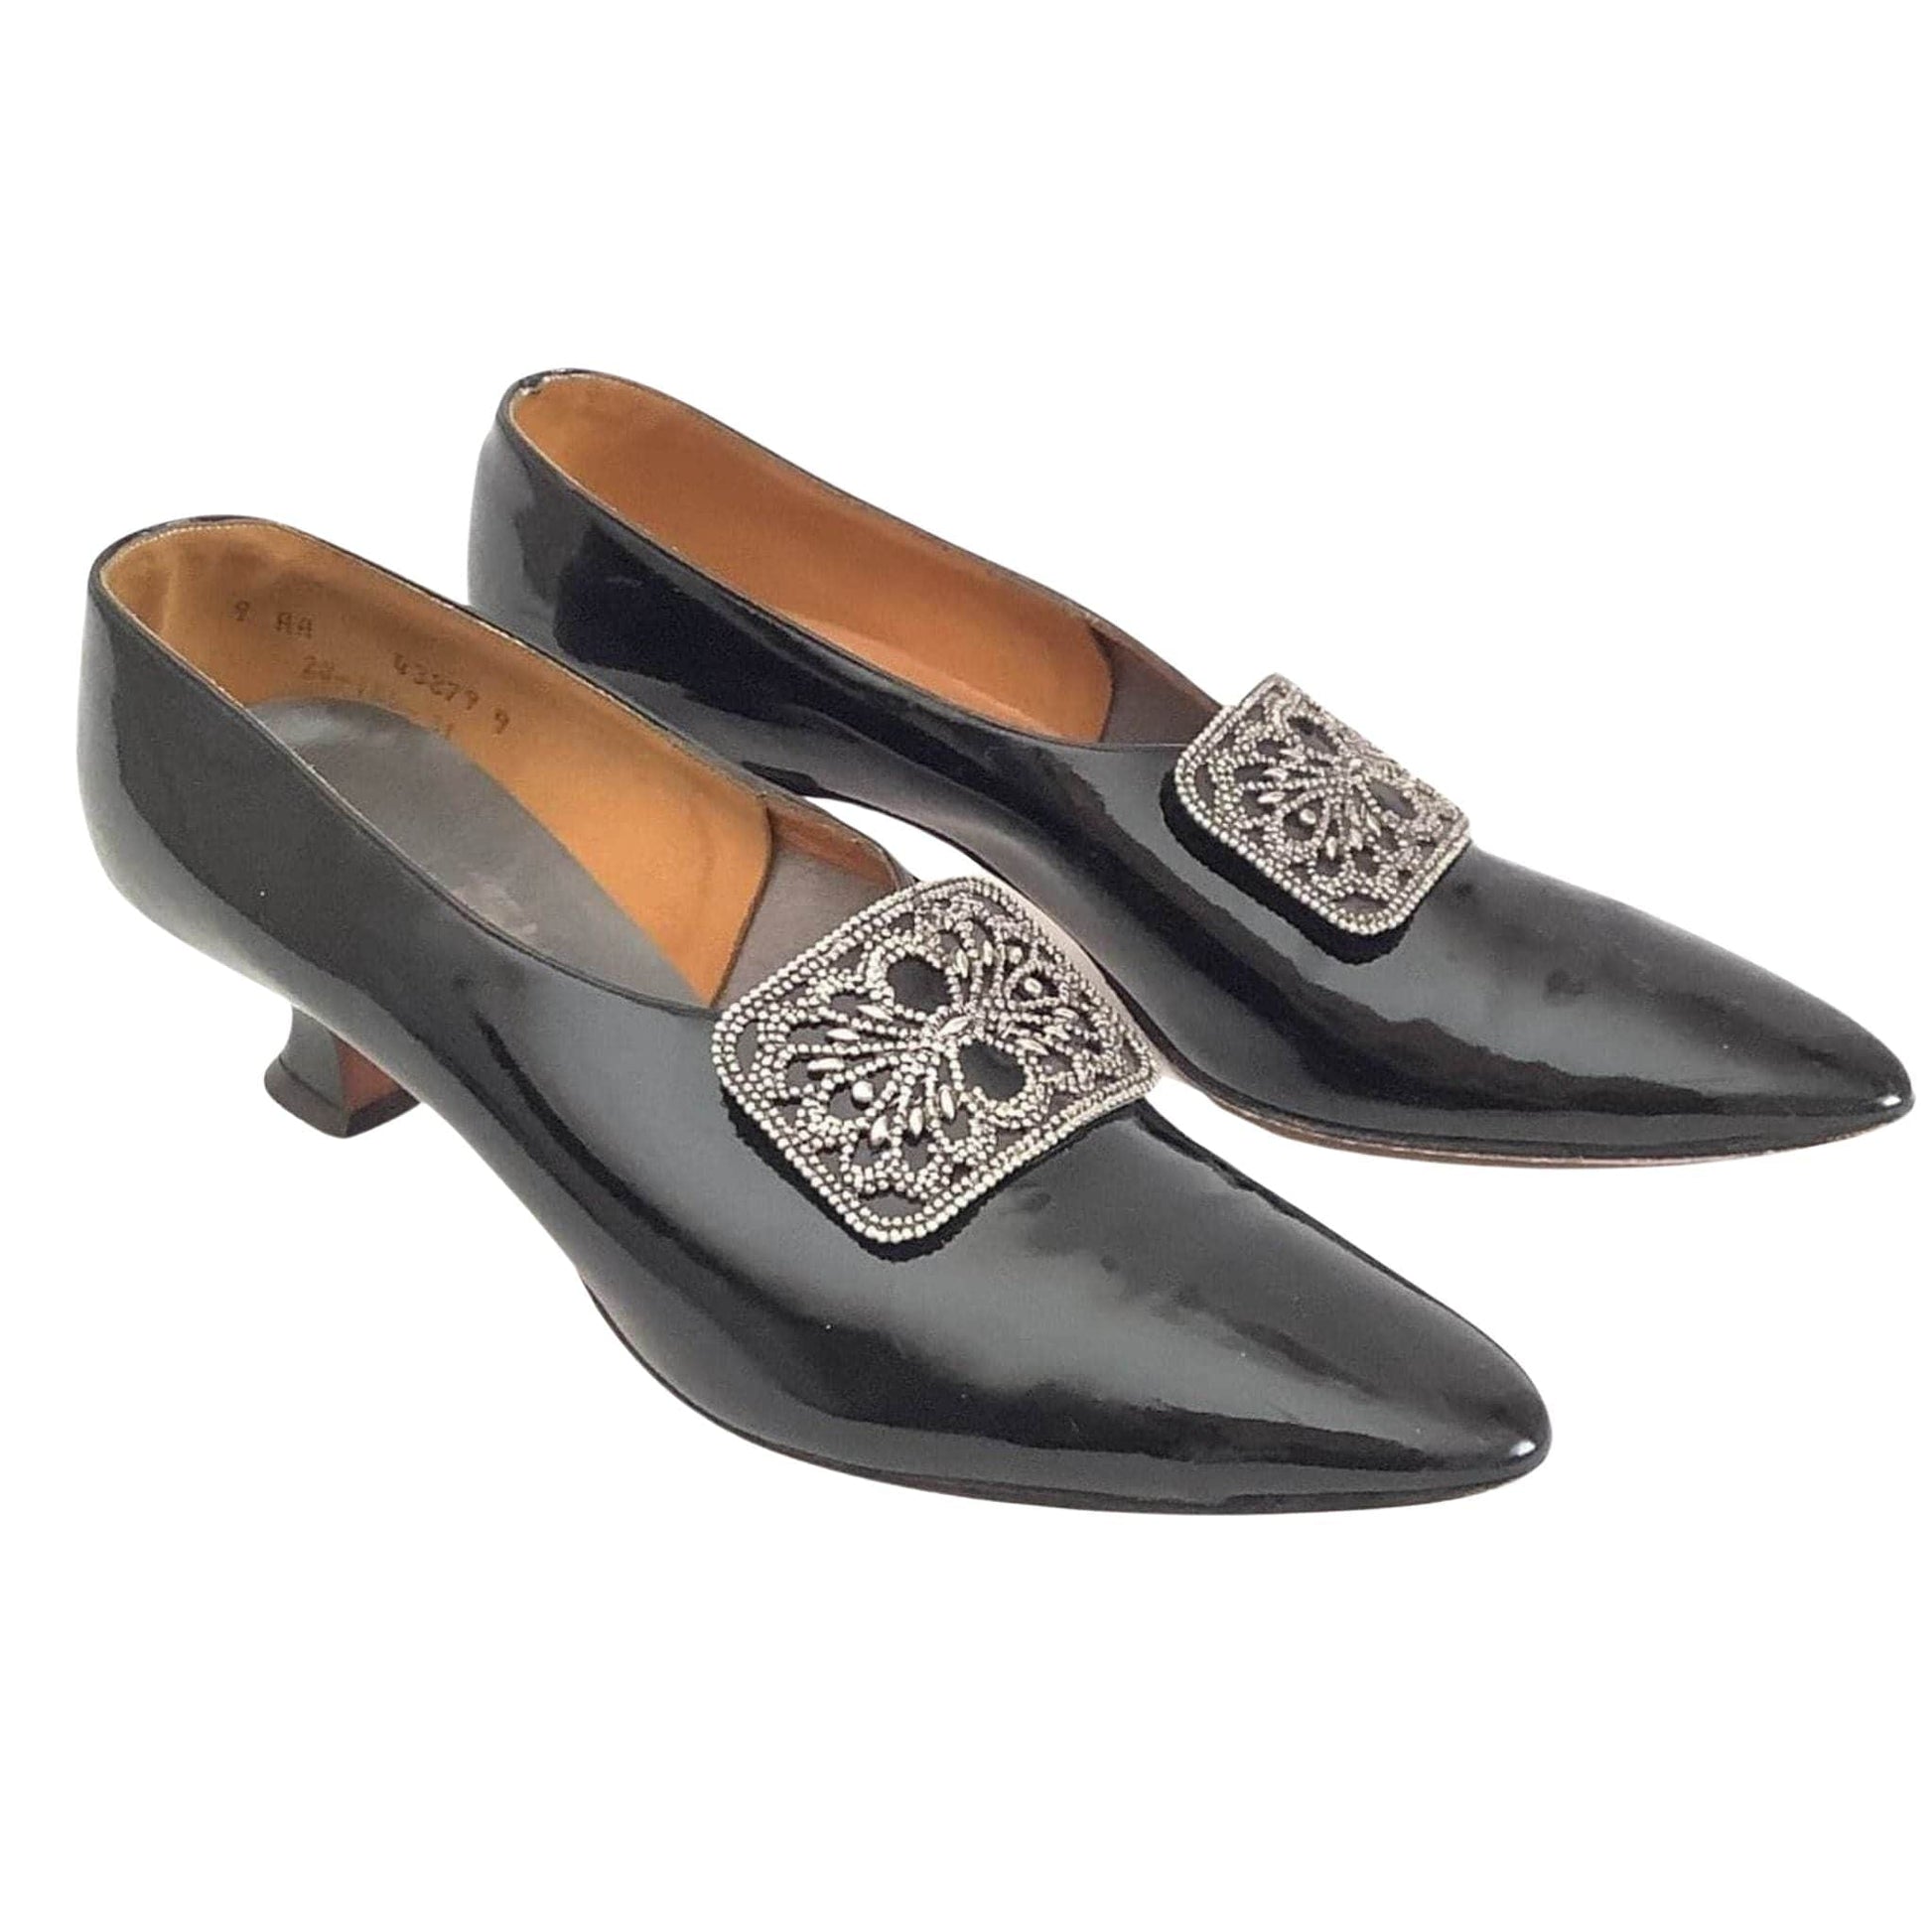 Vintage Palter Deliso Heels 8.5 / Black / Vintage 1930s